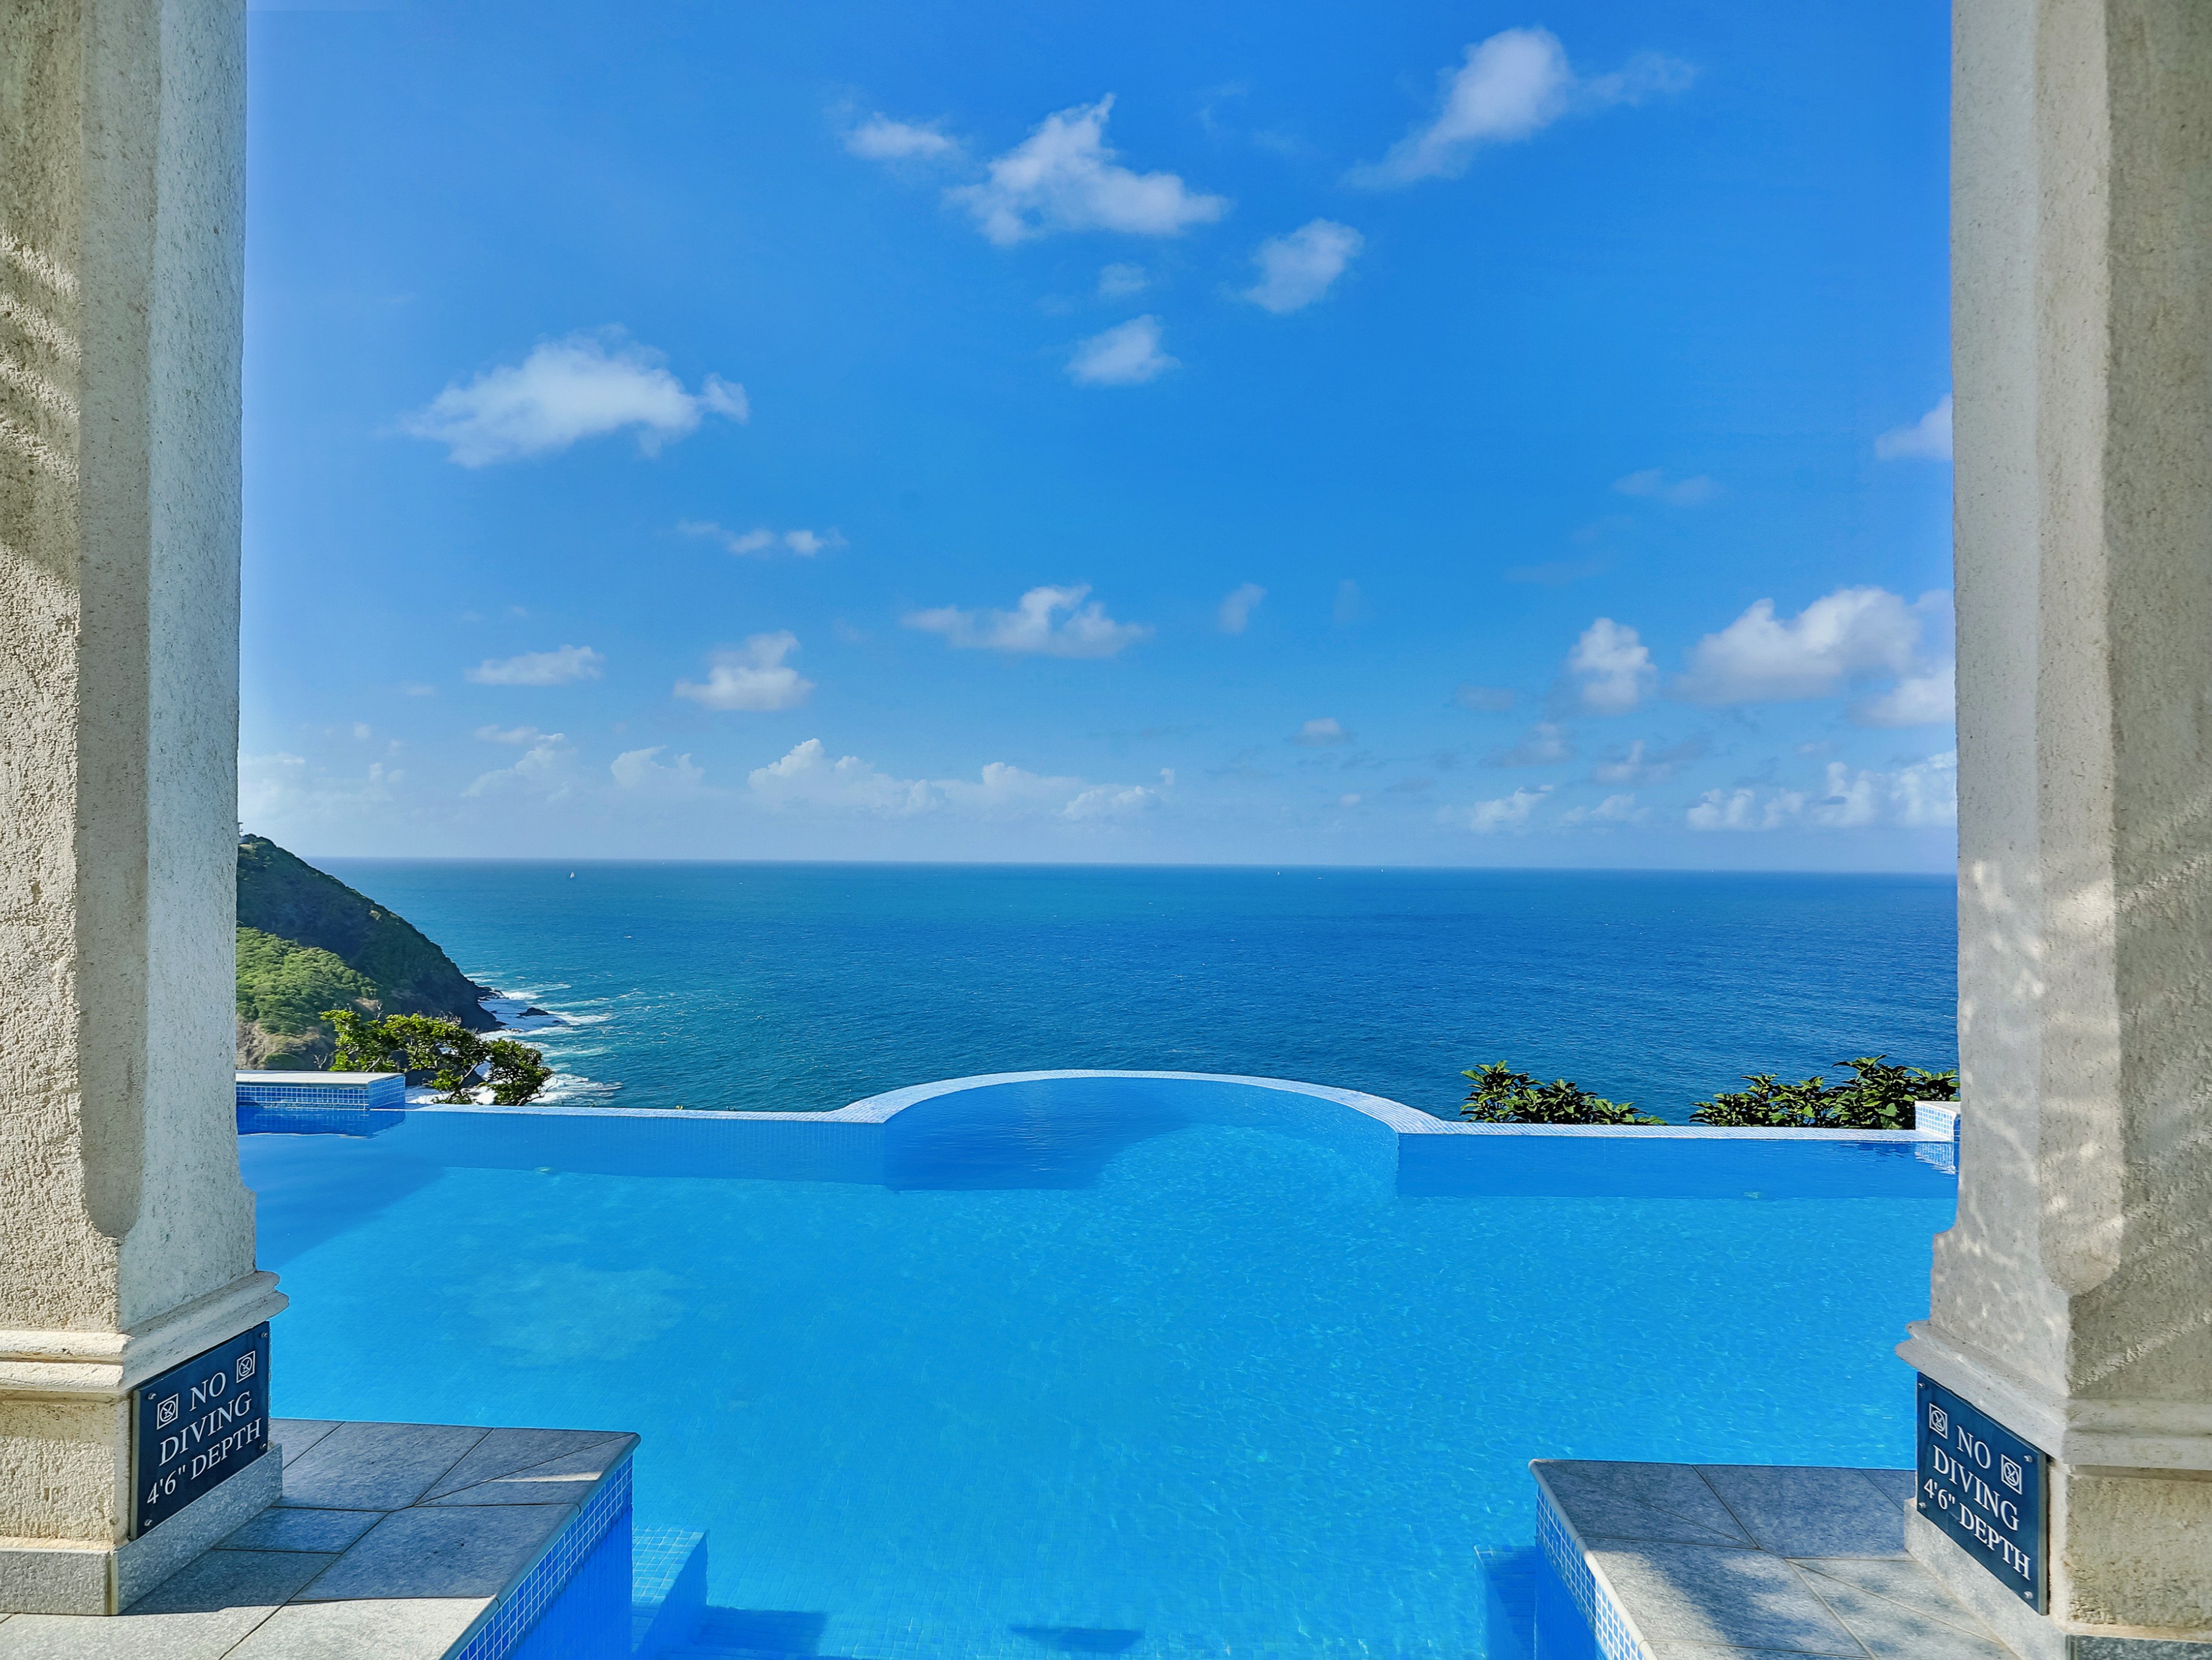 Cayman Villa Saint Lucia luxury villa rentals with private pools